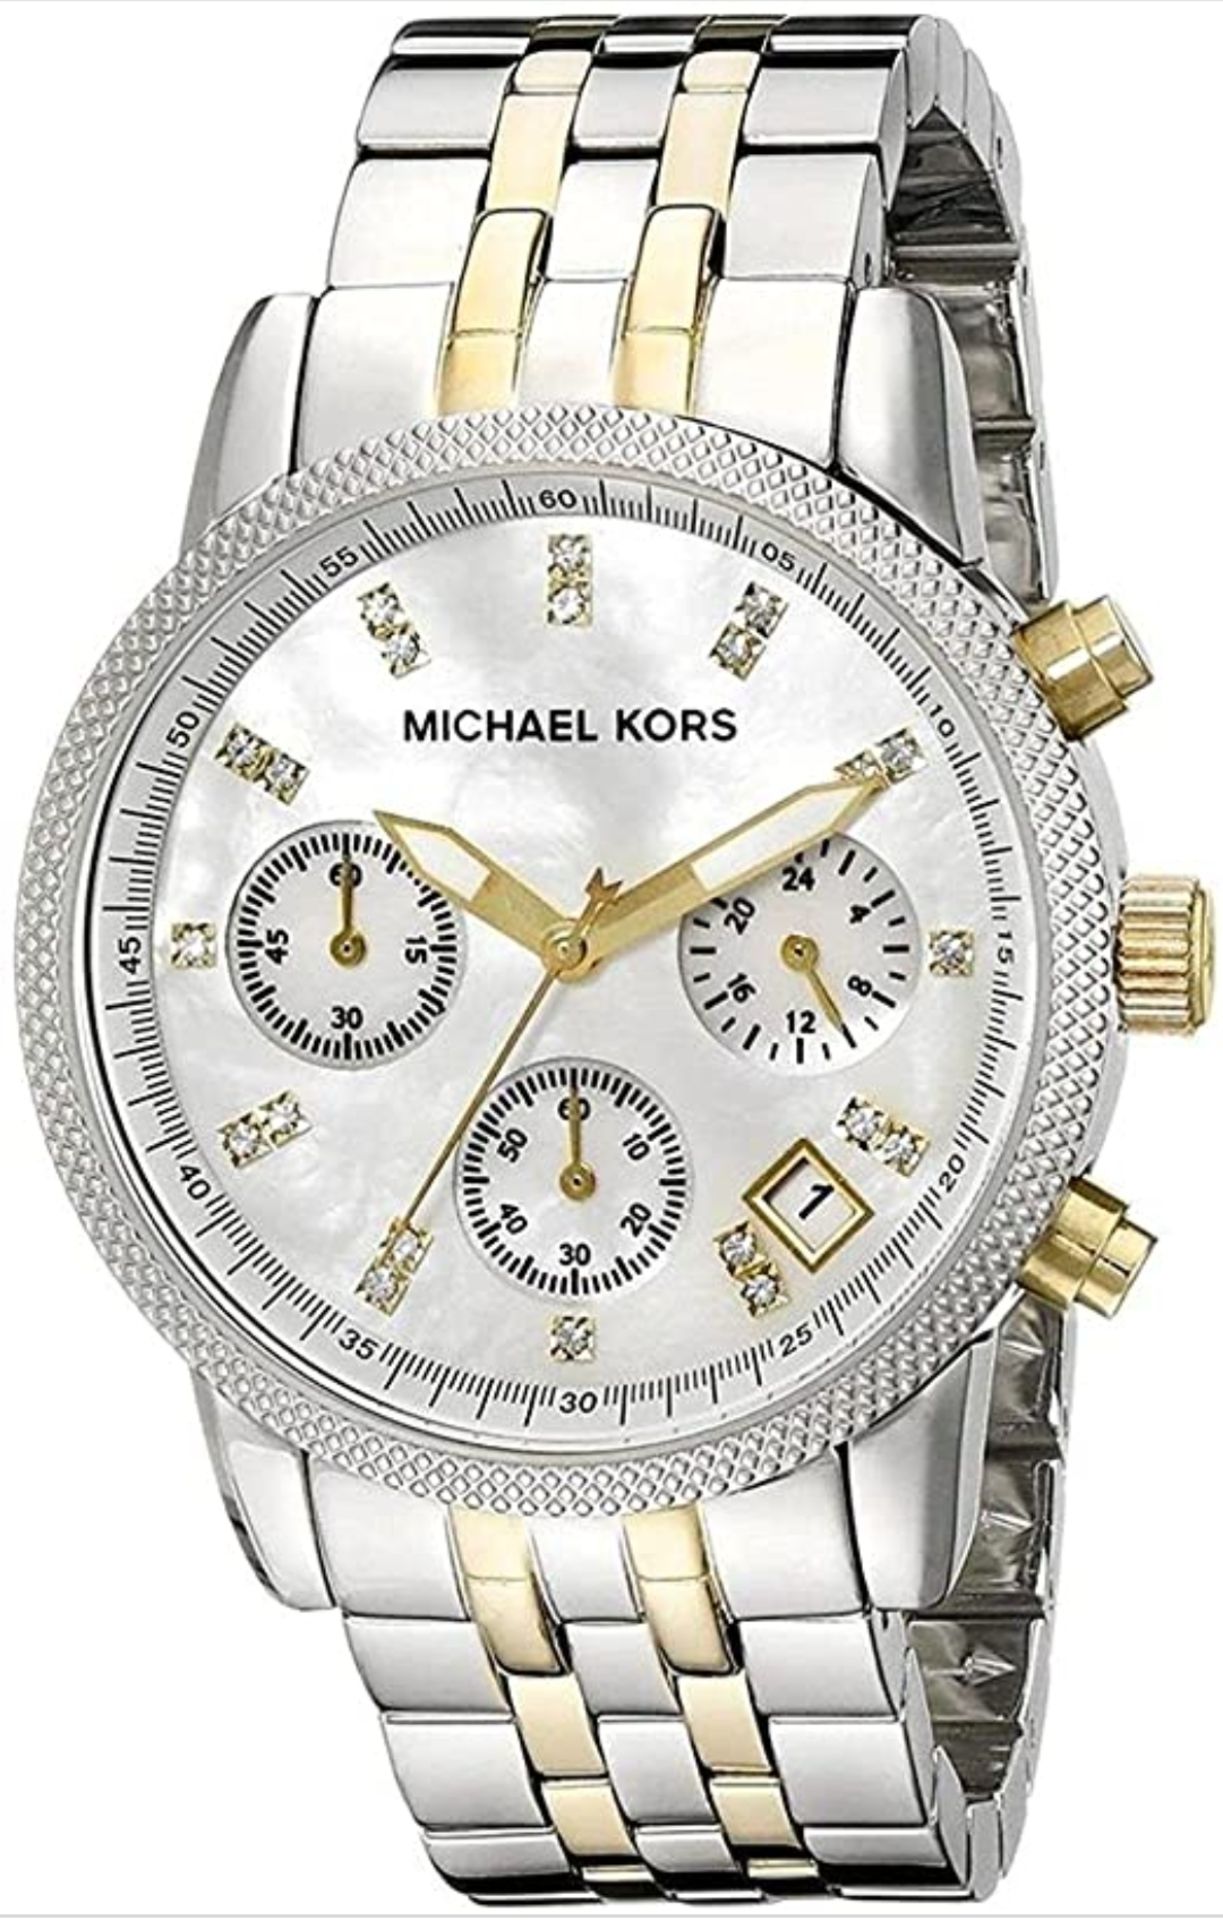 Michael Kors MK5057 Ladies Ritz Watch - Image 5 of 9